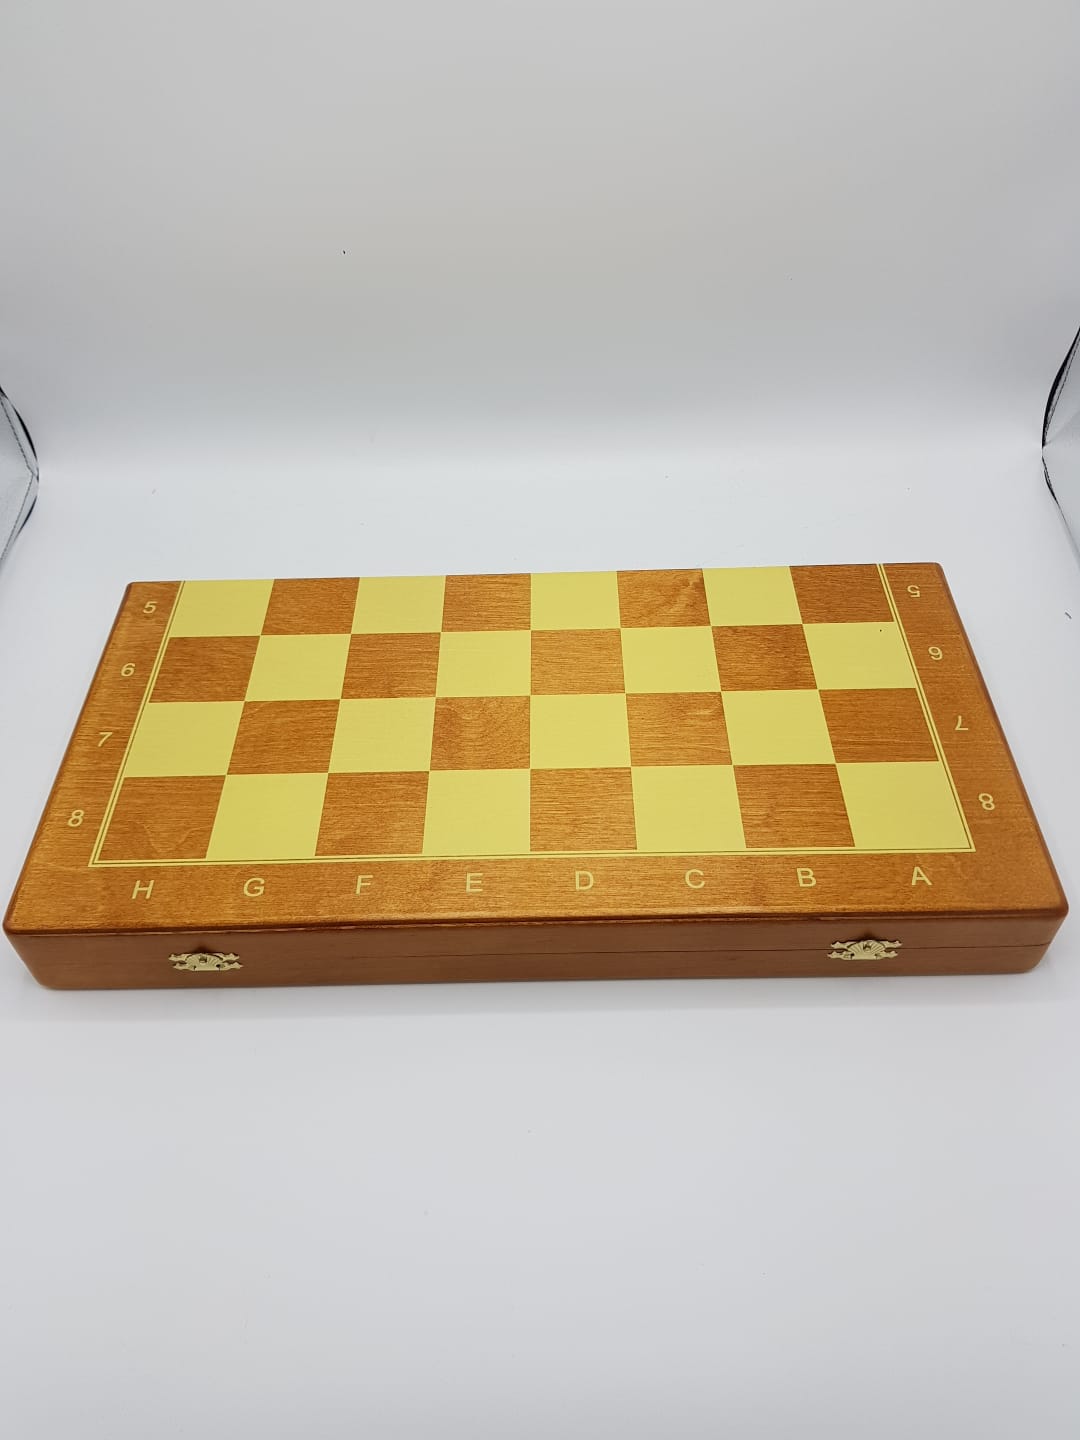 Chess cassette Tournament Nr. 5 - Printed